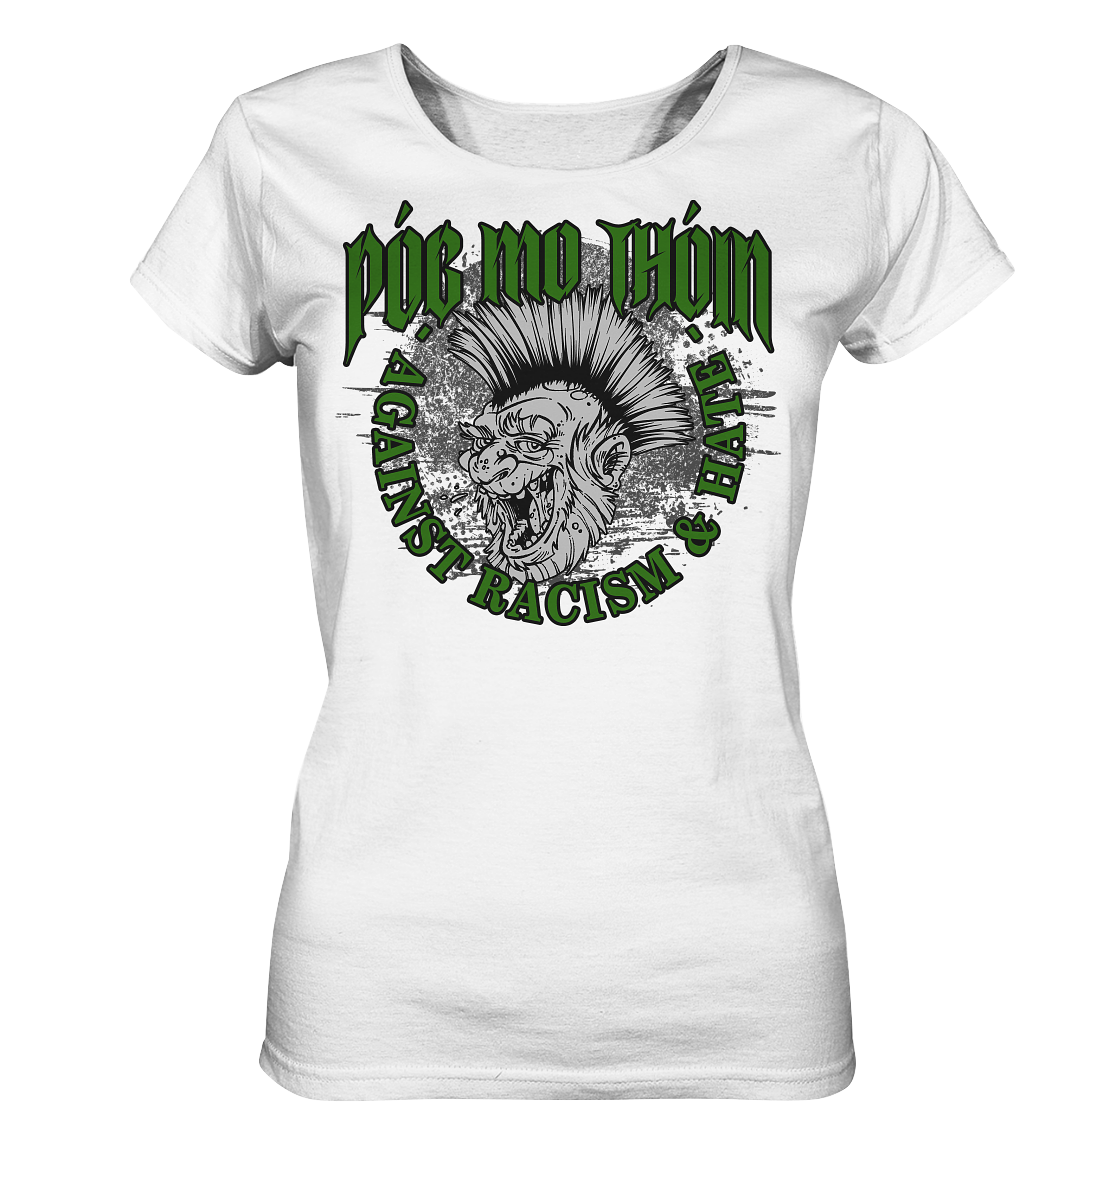 Póg Mo Thóin Streetwear "Against Racism & Hate" - Ladies Organic Shirt